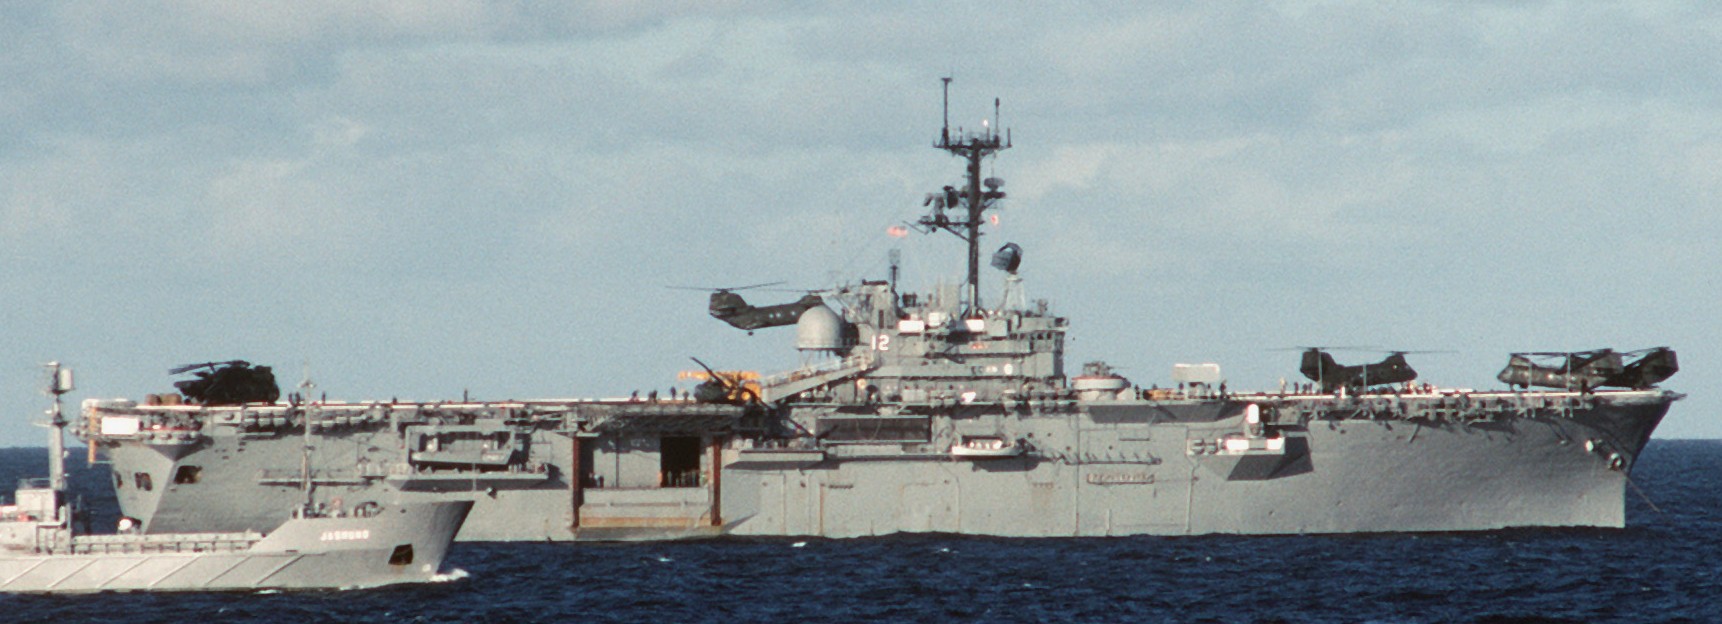 lph-12 uss inchon iwo jima class amphibious assault ship landing platform helicopter us navy 22